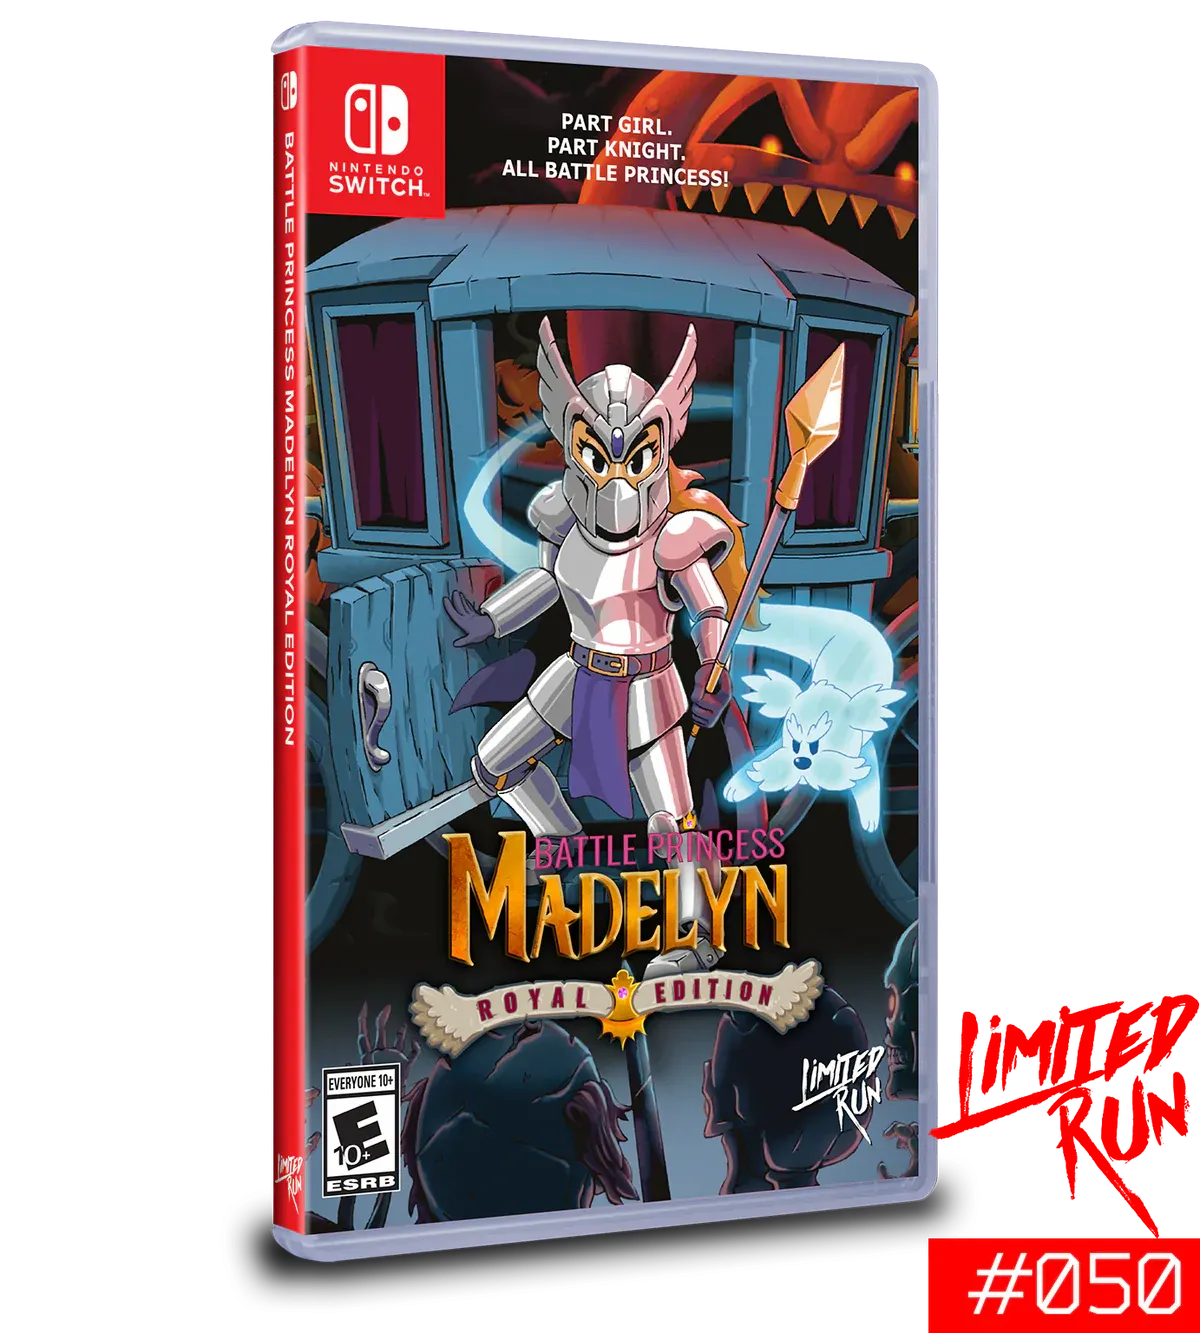 Battle Princess Madelyn: Royal Edition Video Game